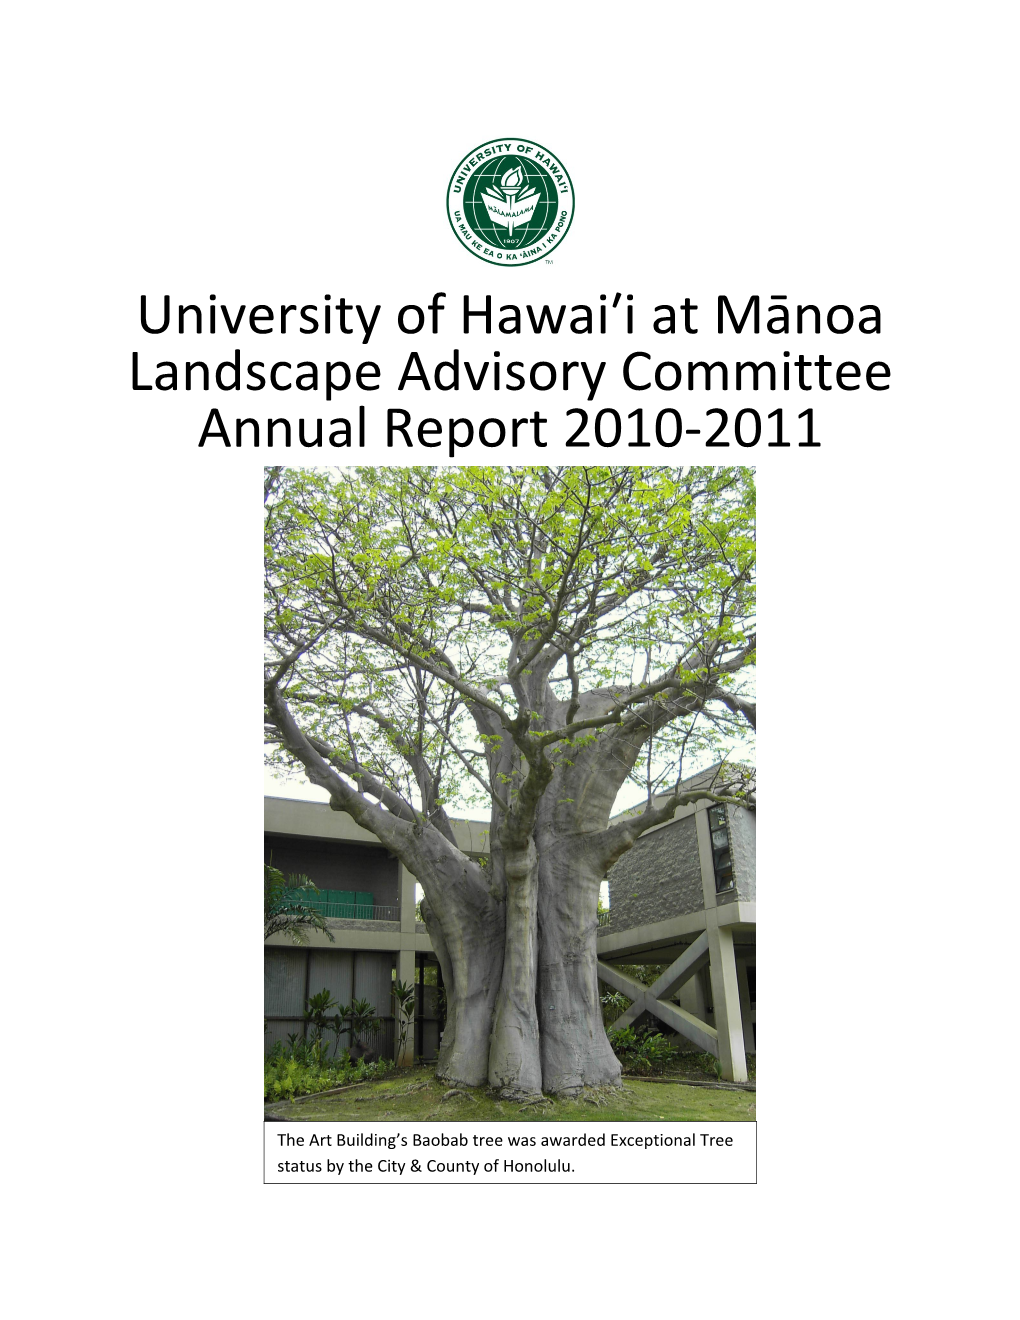 University of Hawaii at Manoa Landscape Advisory Committee